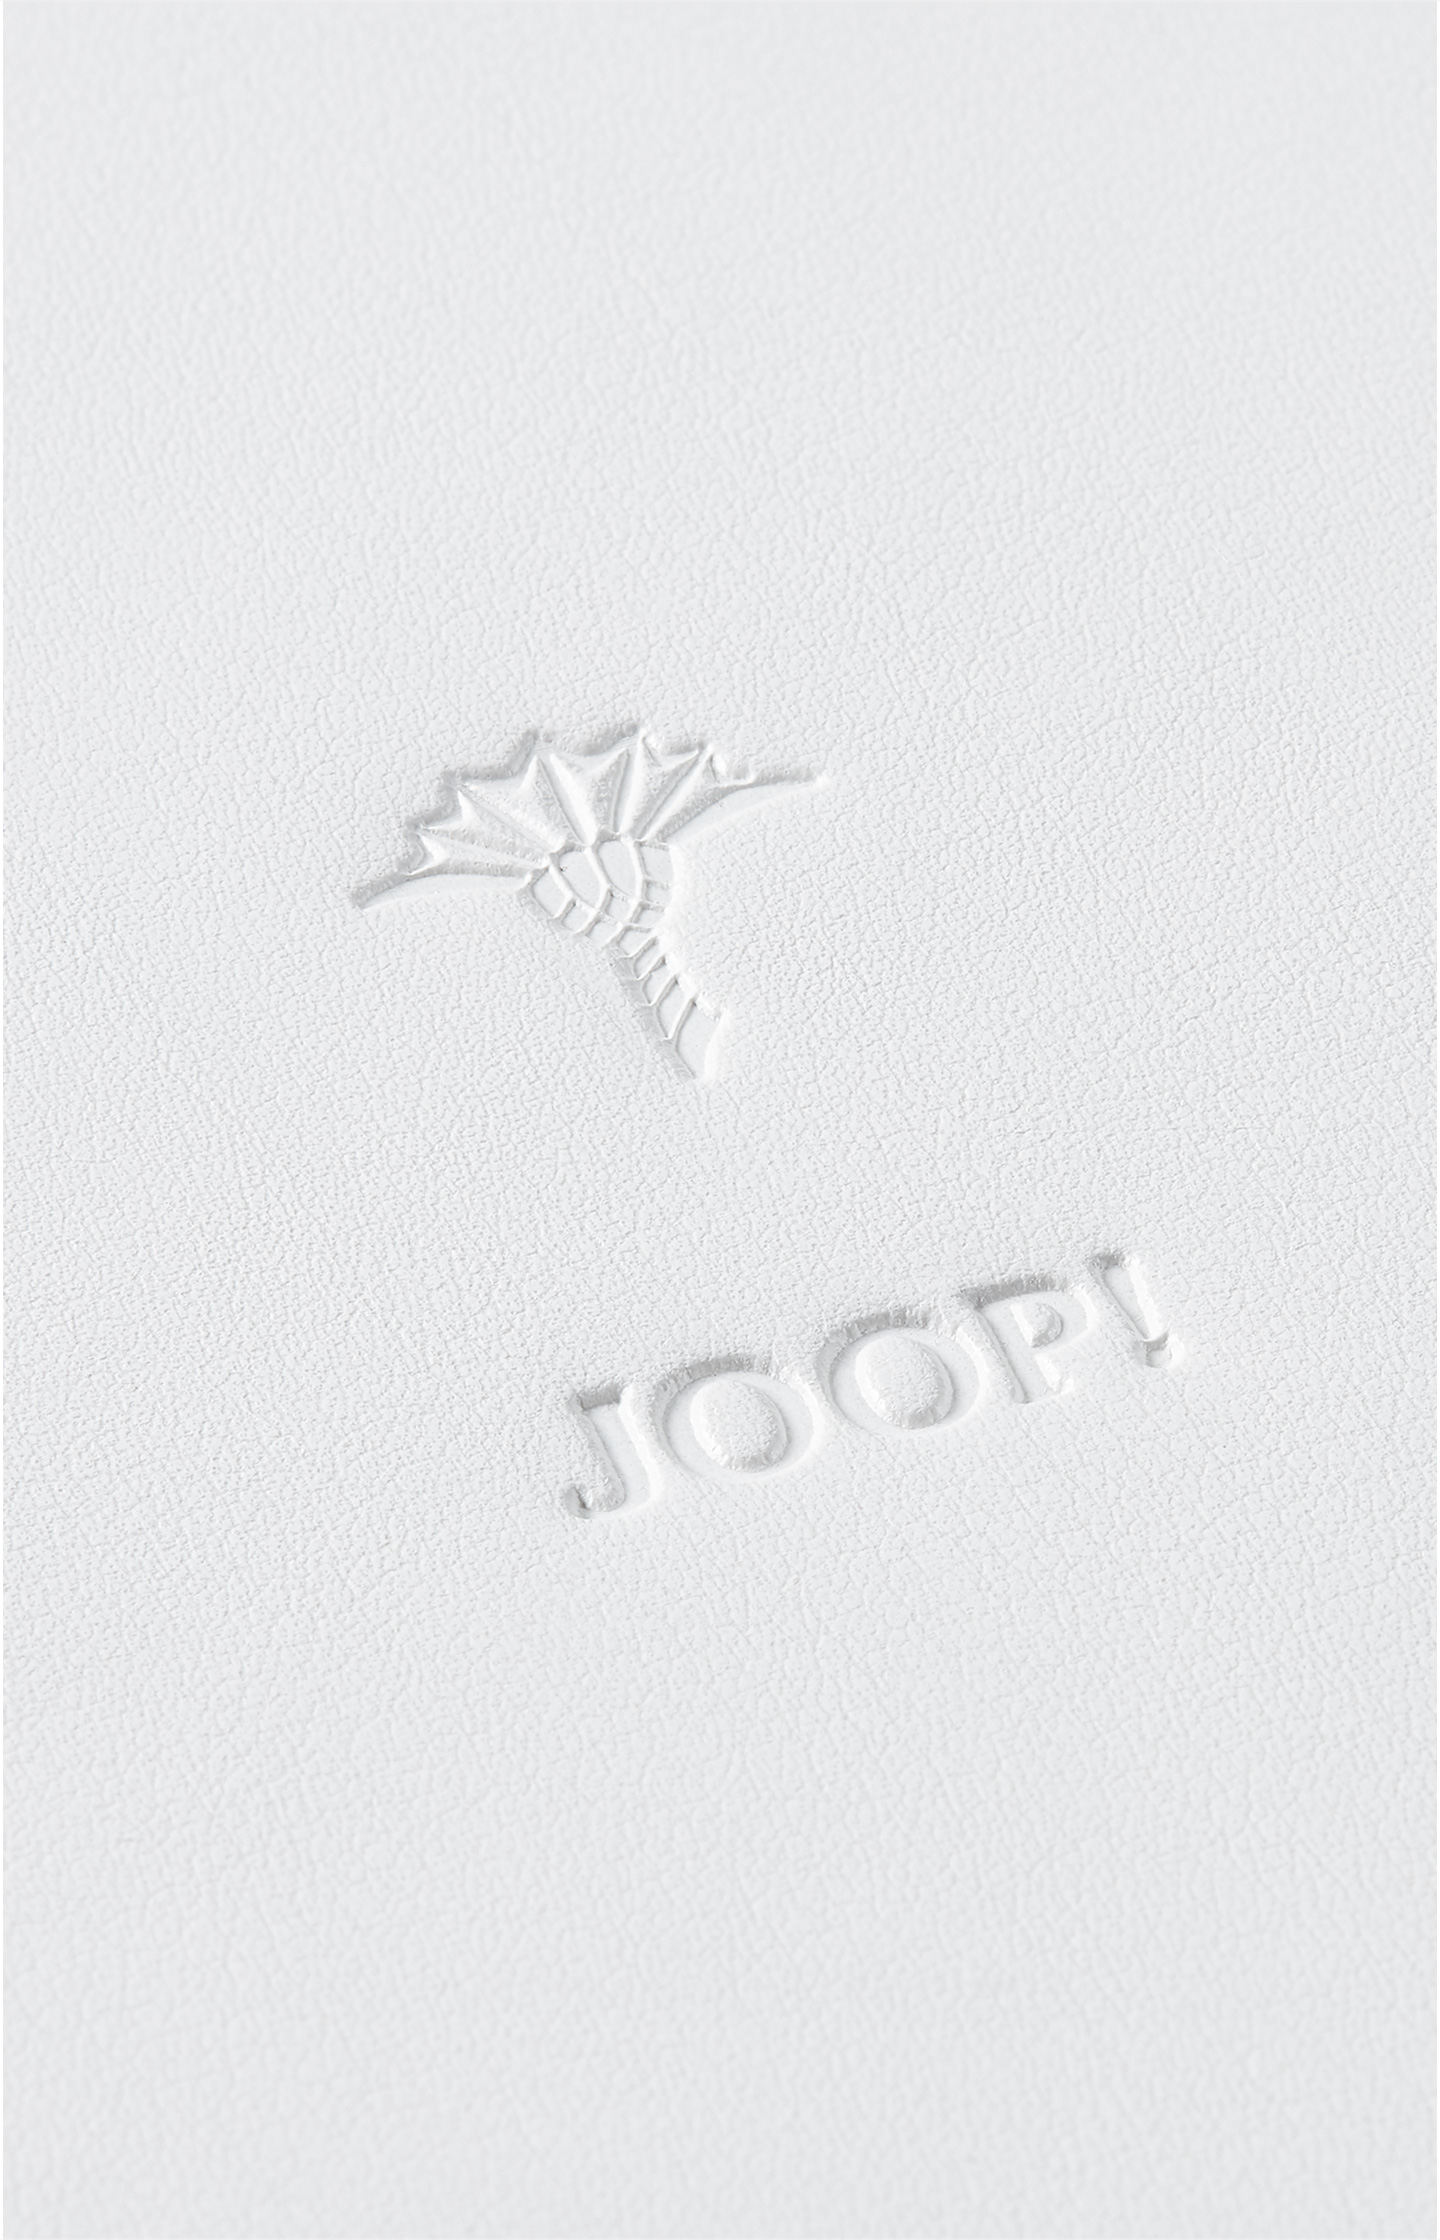 JOOP! Homeline - Rundes Tablett in Weiß, JOOP! klein im Online-Shop 